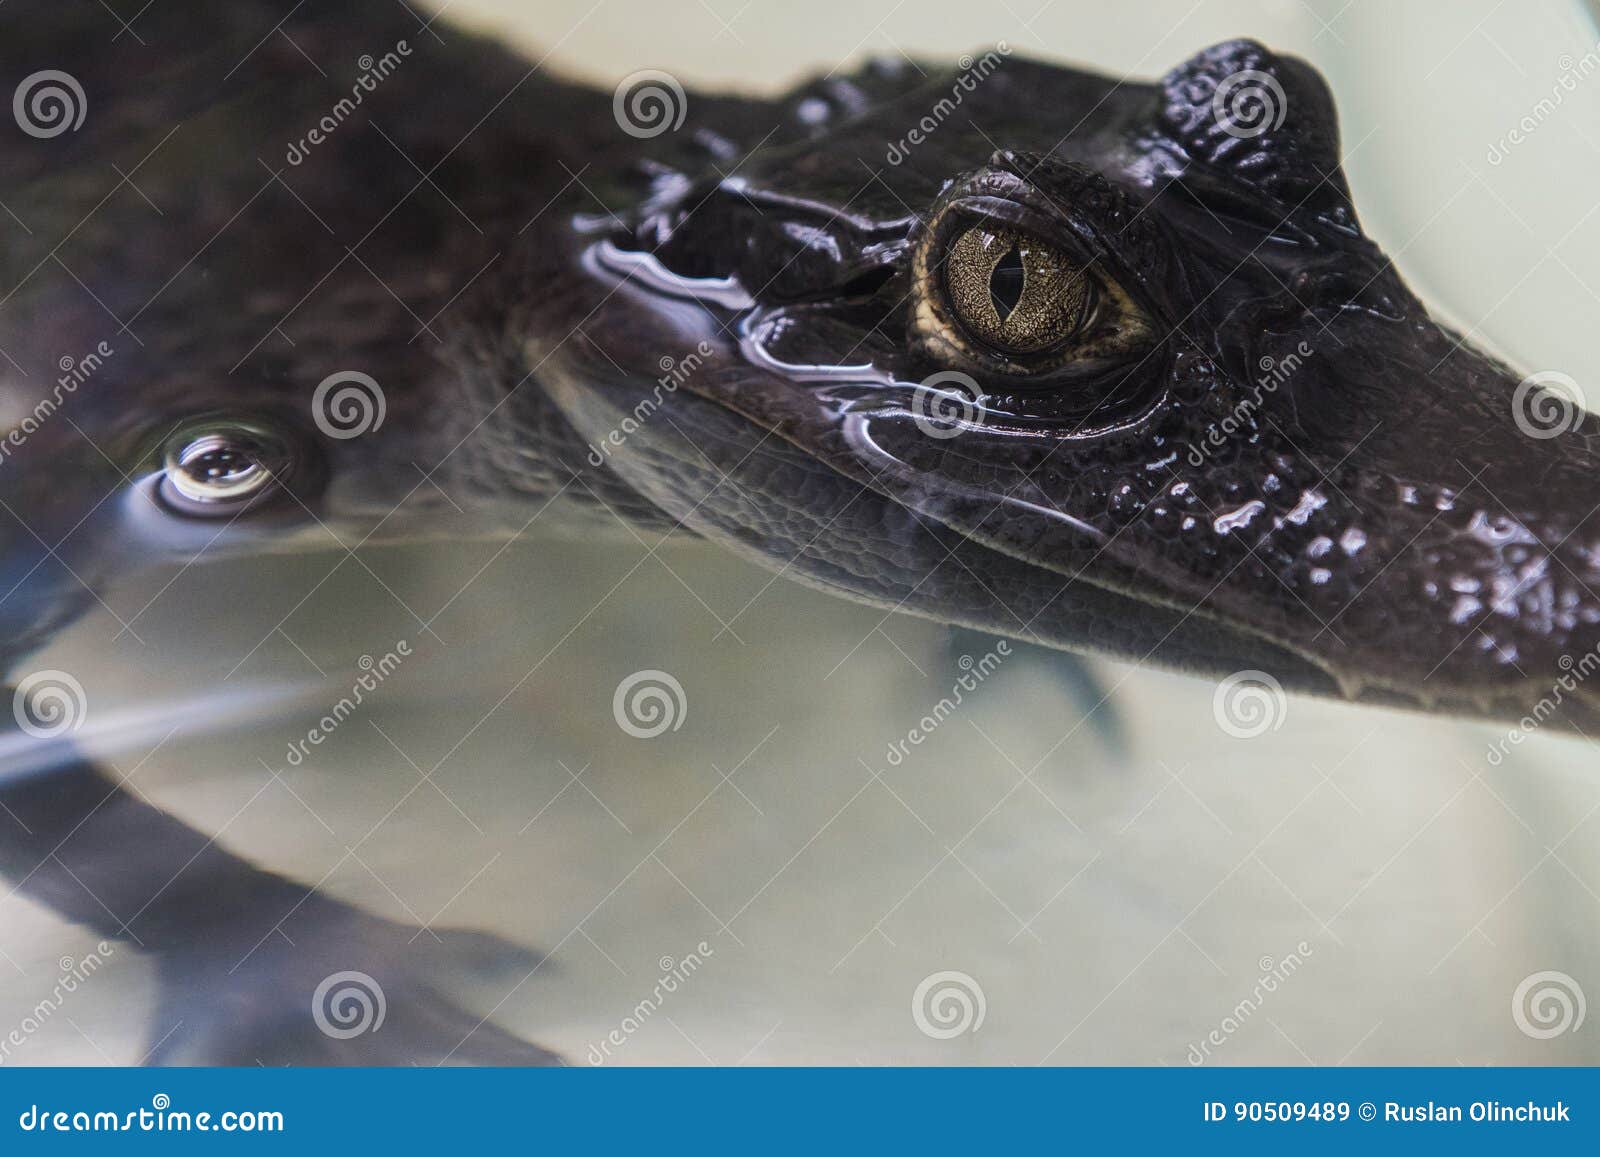 beautiful caiman crocodile